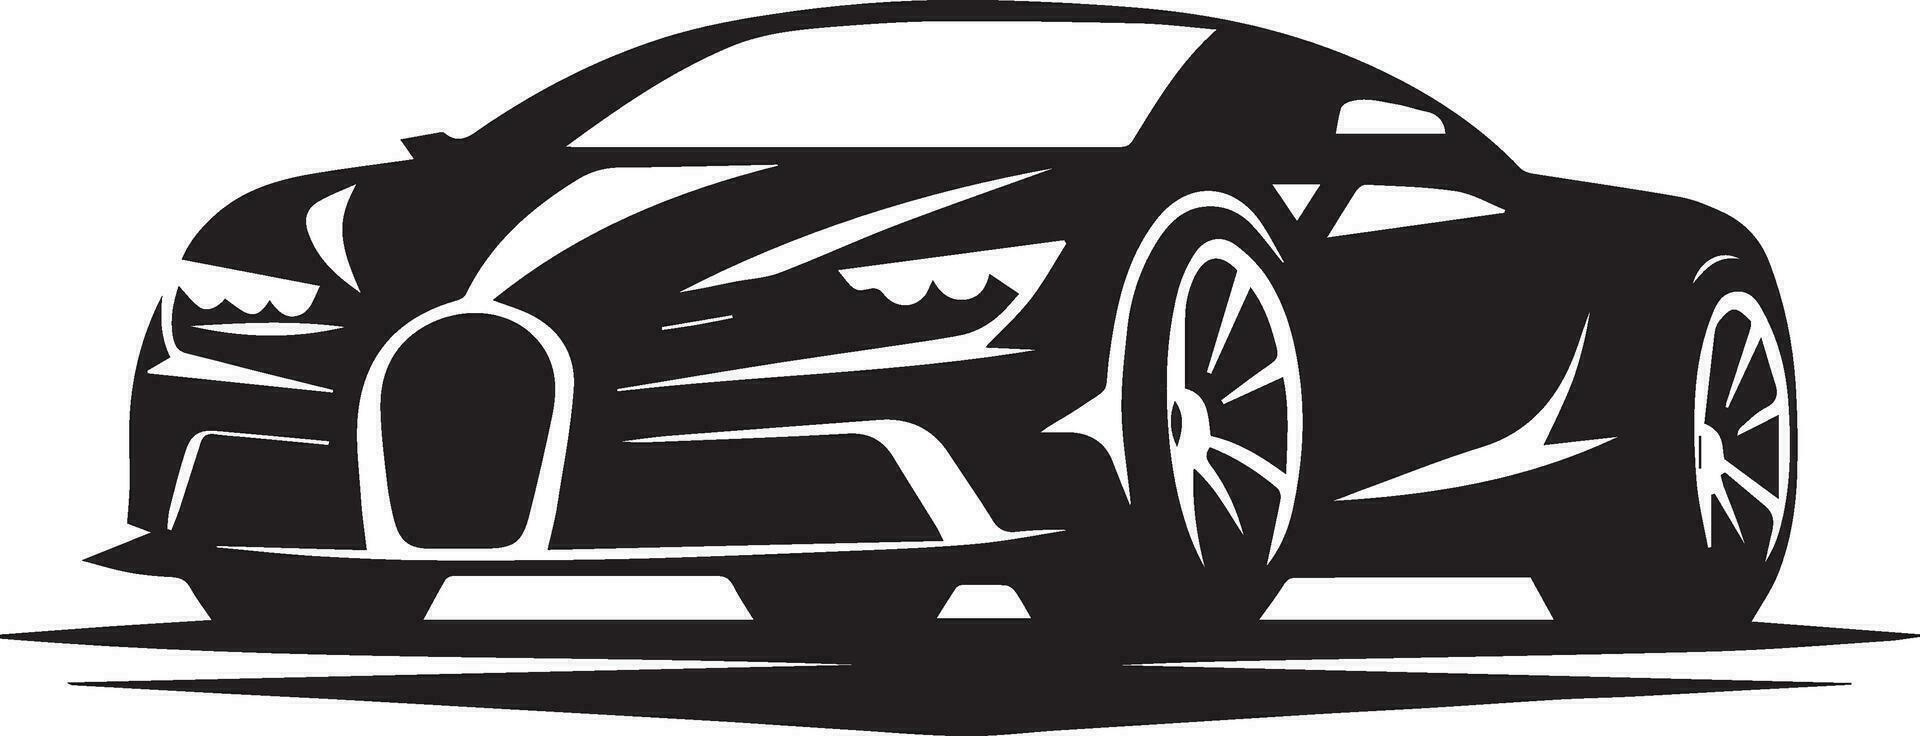 Car vector silhouette illustration black color 15